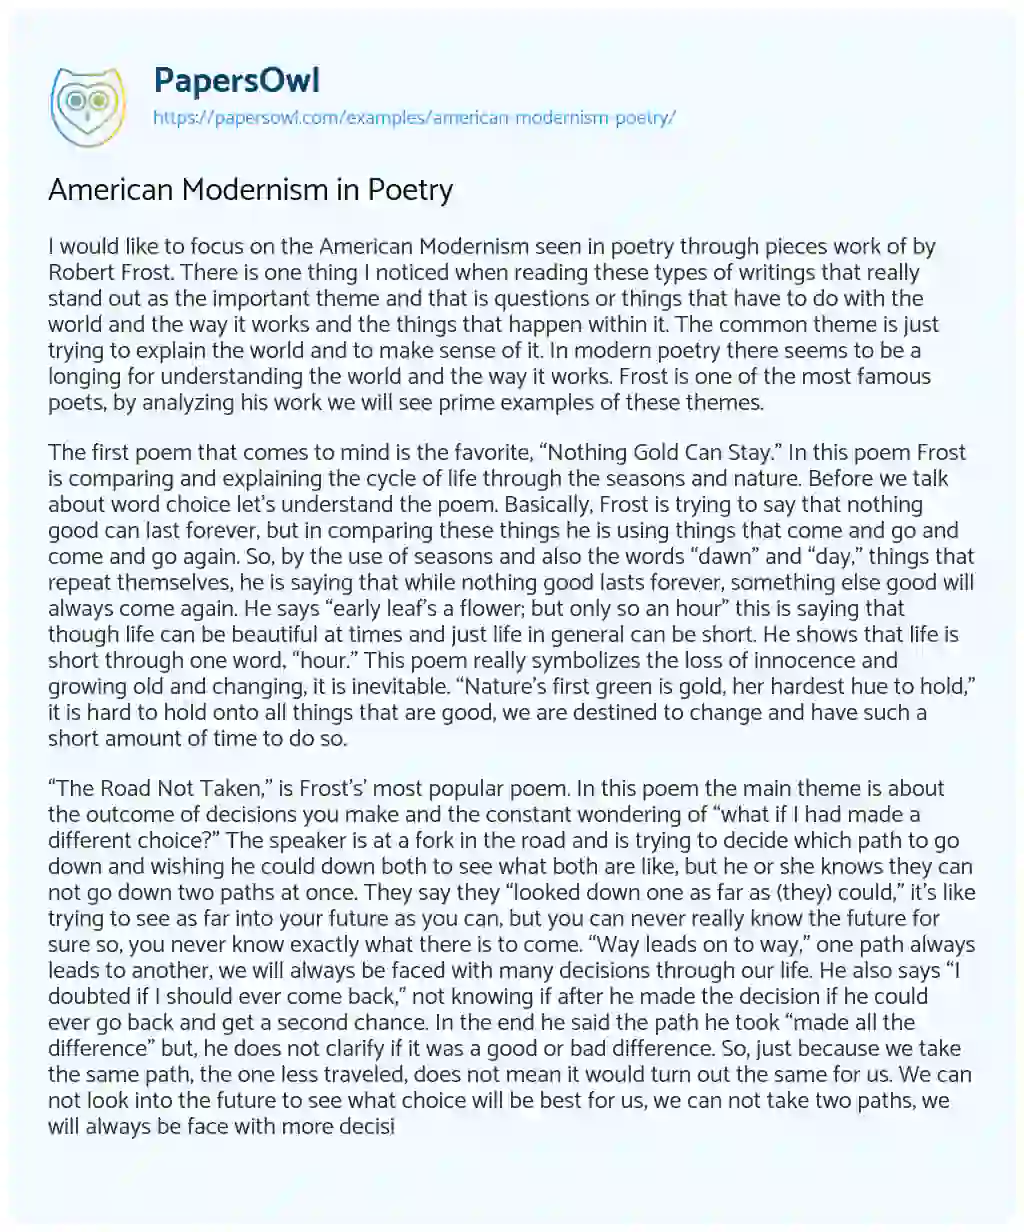 Essay on American Modernism in Poetry